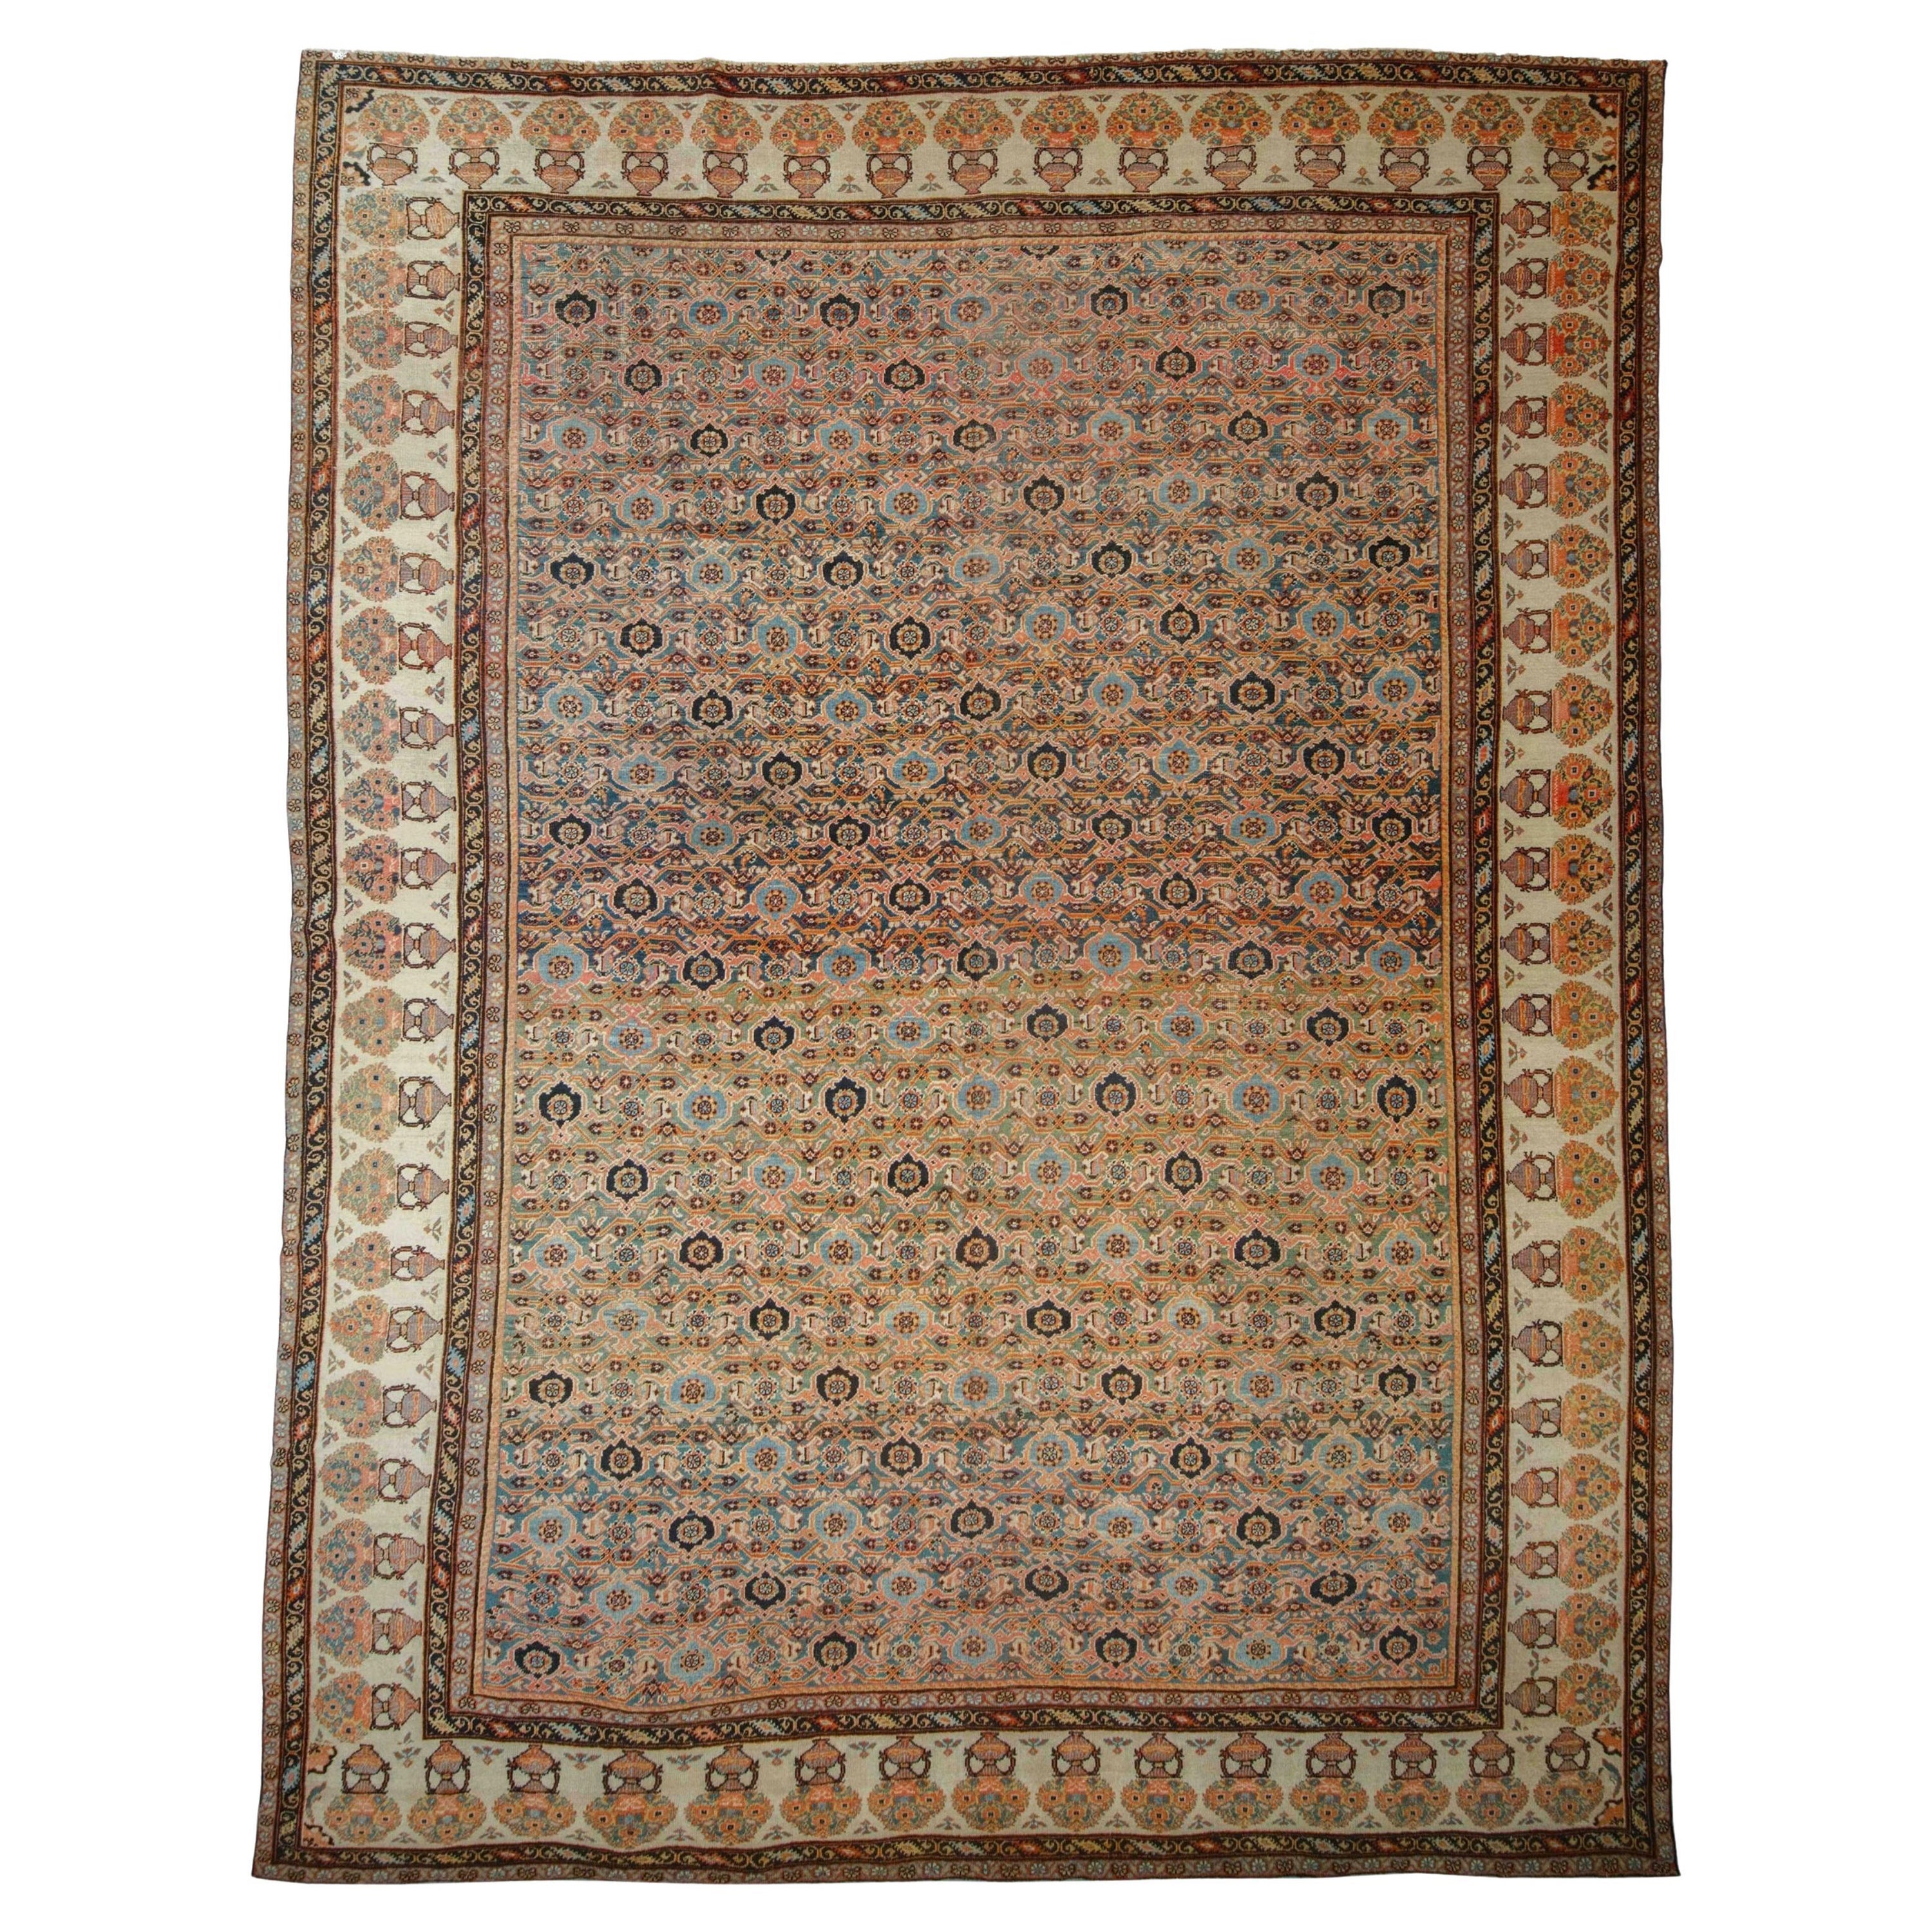 Antiker Mahal-Teppich - Mahal-Teppich aus dem späten 19. Jahrhundert, antiker Teppich